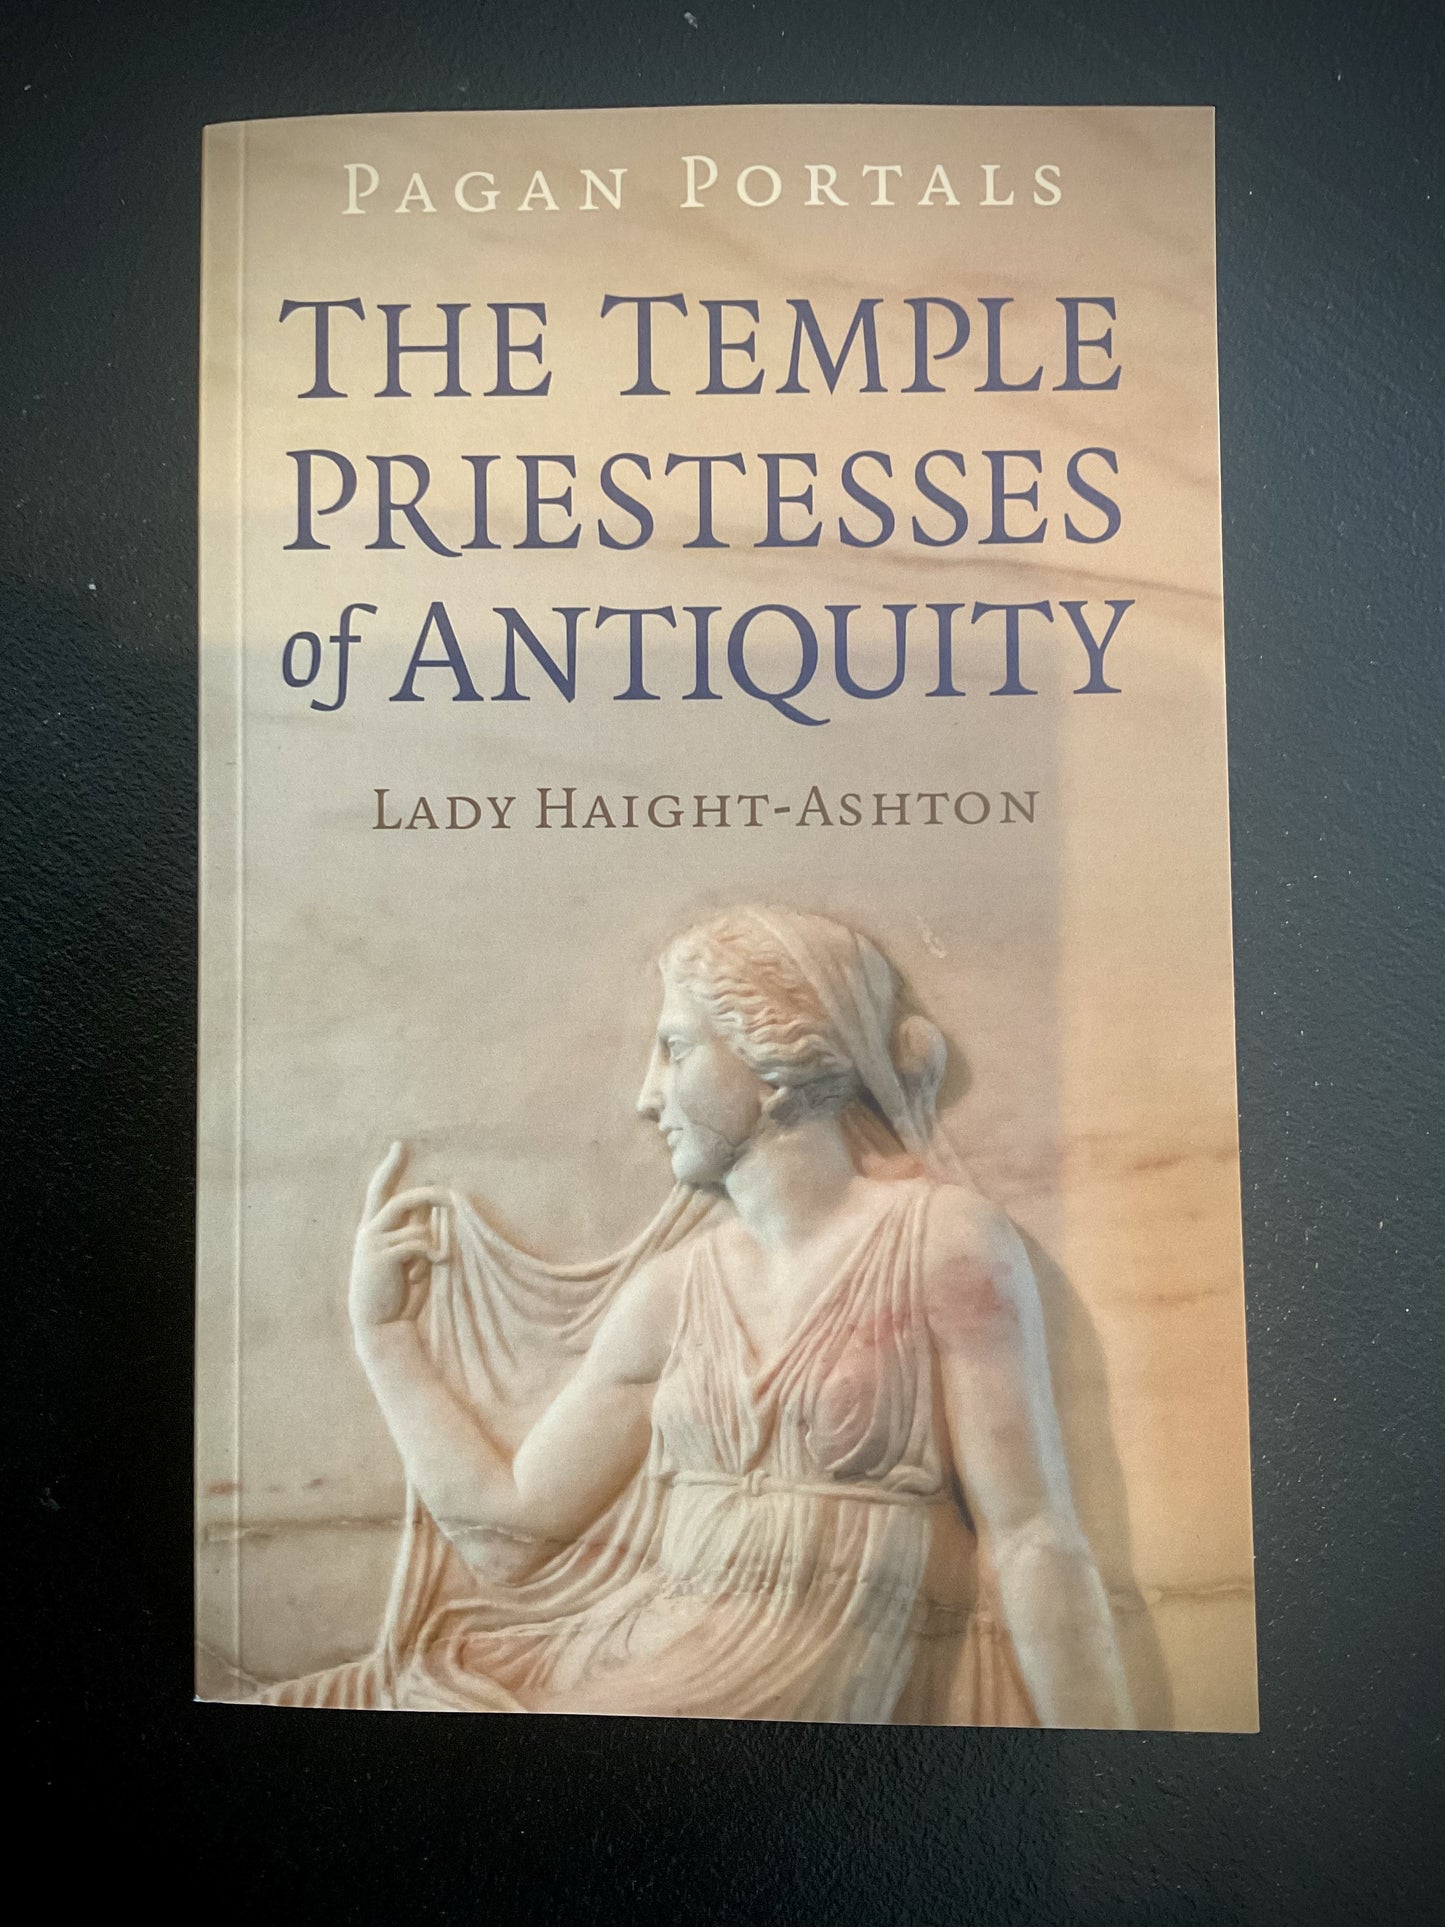 The Temple Priestesses of Antiquity- Lady Haight-Ashton